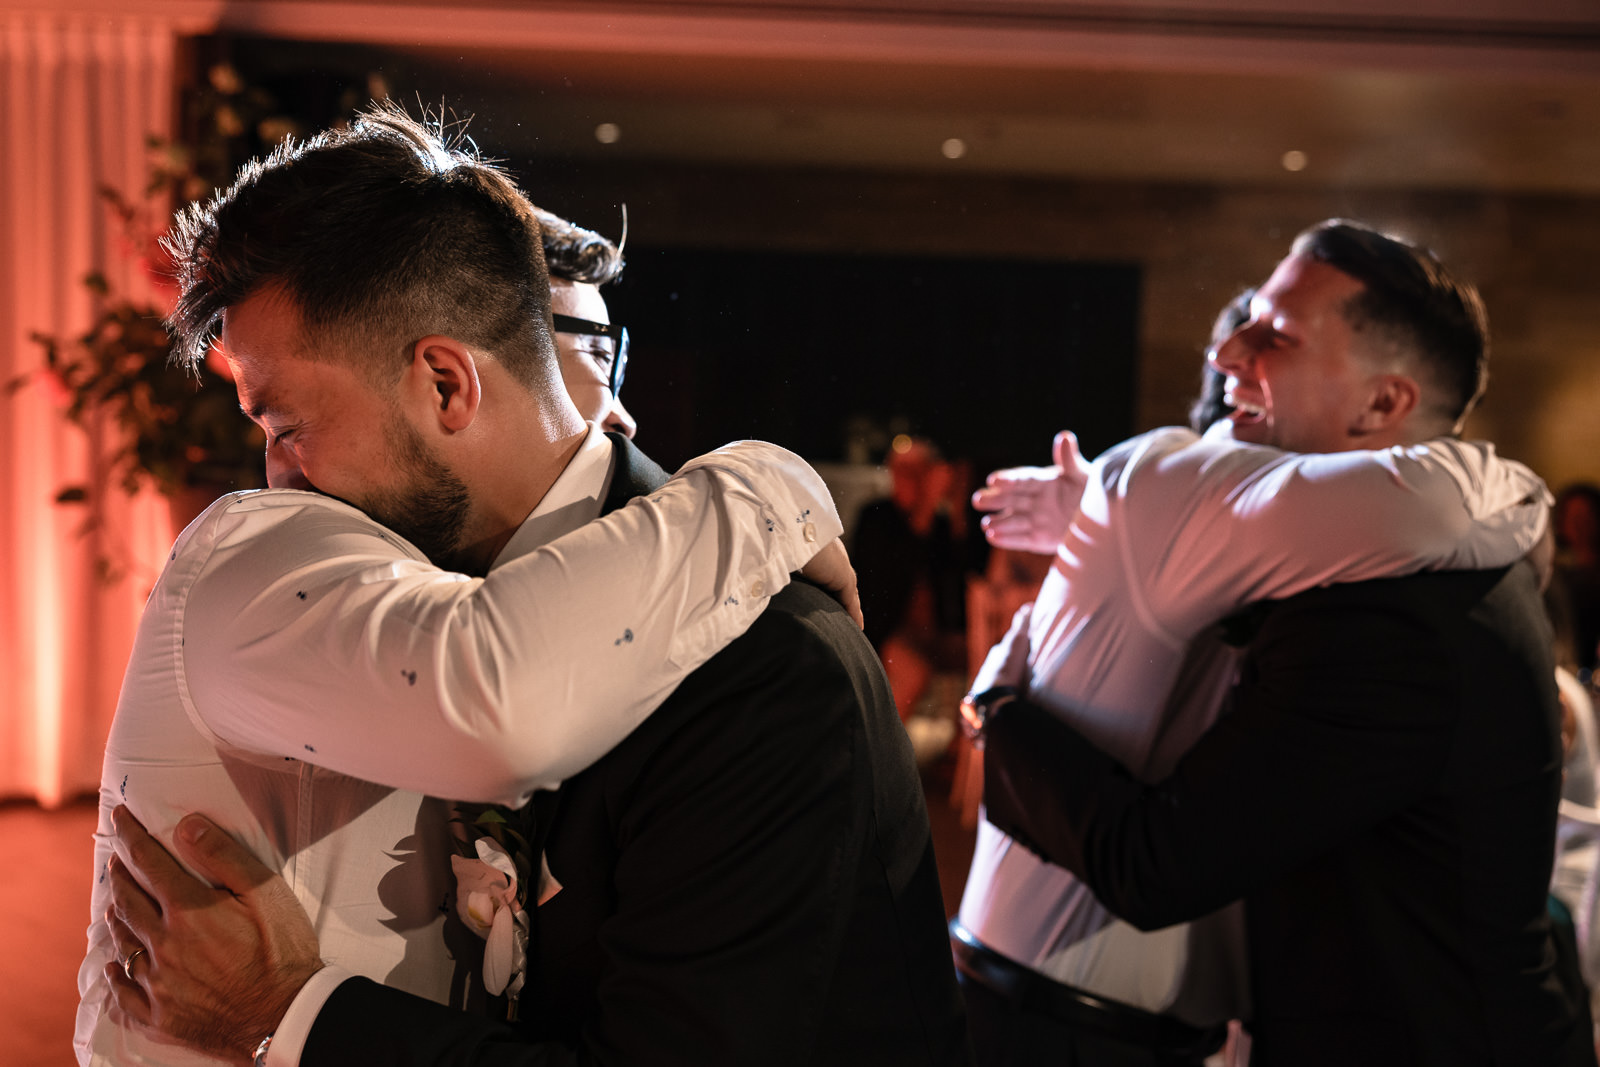 Hugs after wedding speeches during dinner